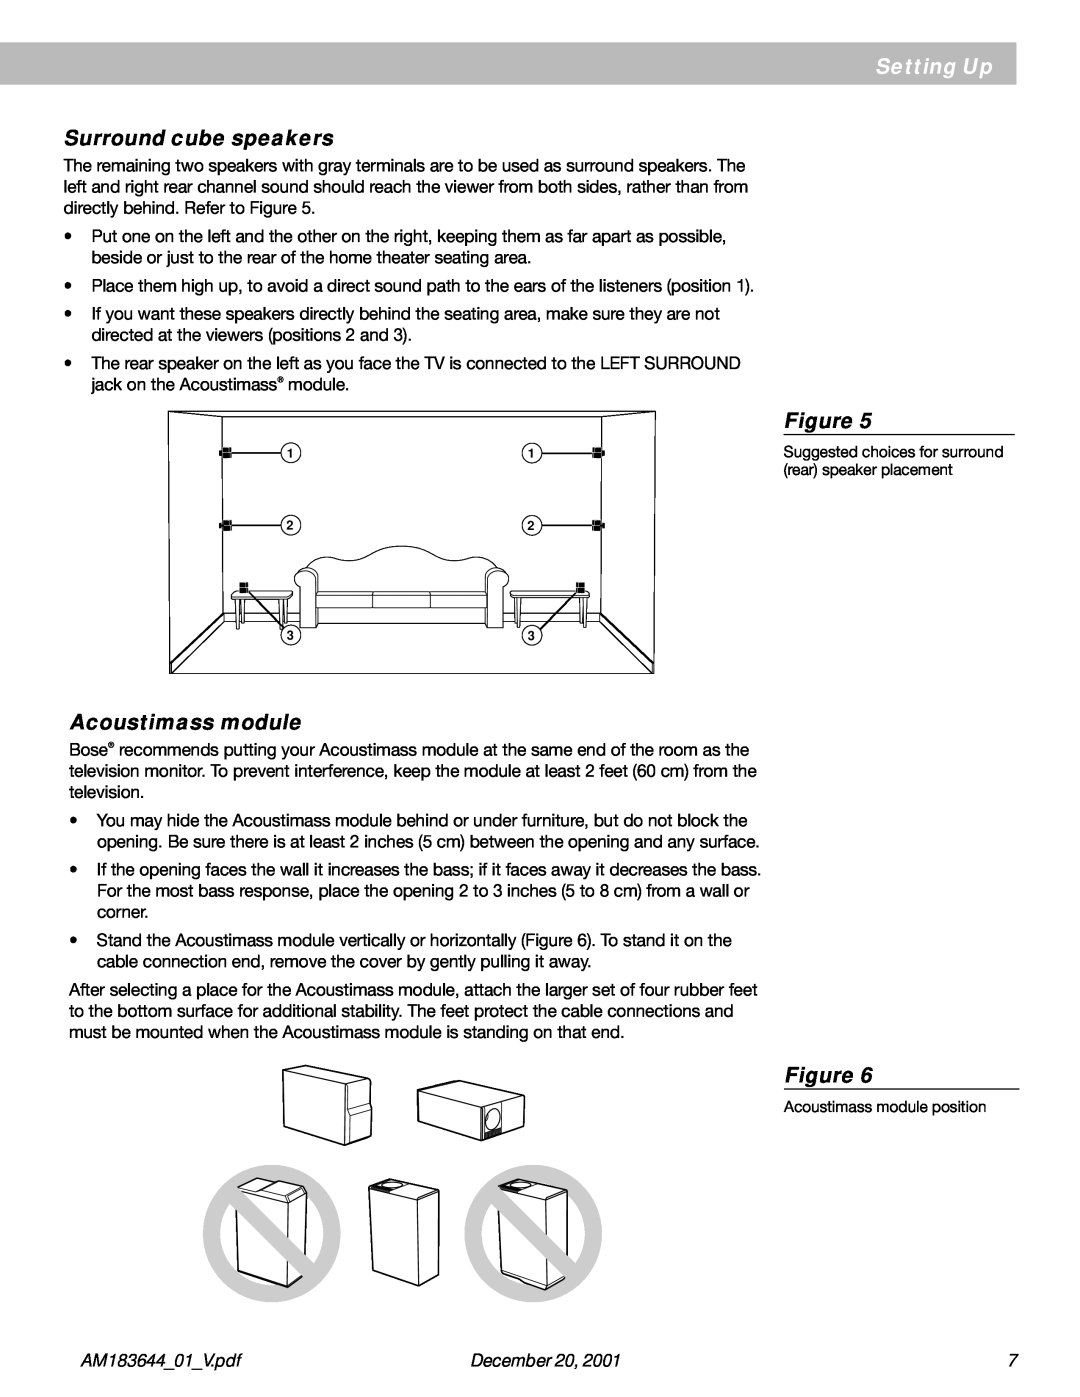 Bose Acoustimass - 10 manual Surround cube speakers, Acoustimass module, Setting Up, December 